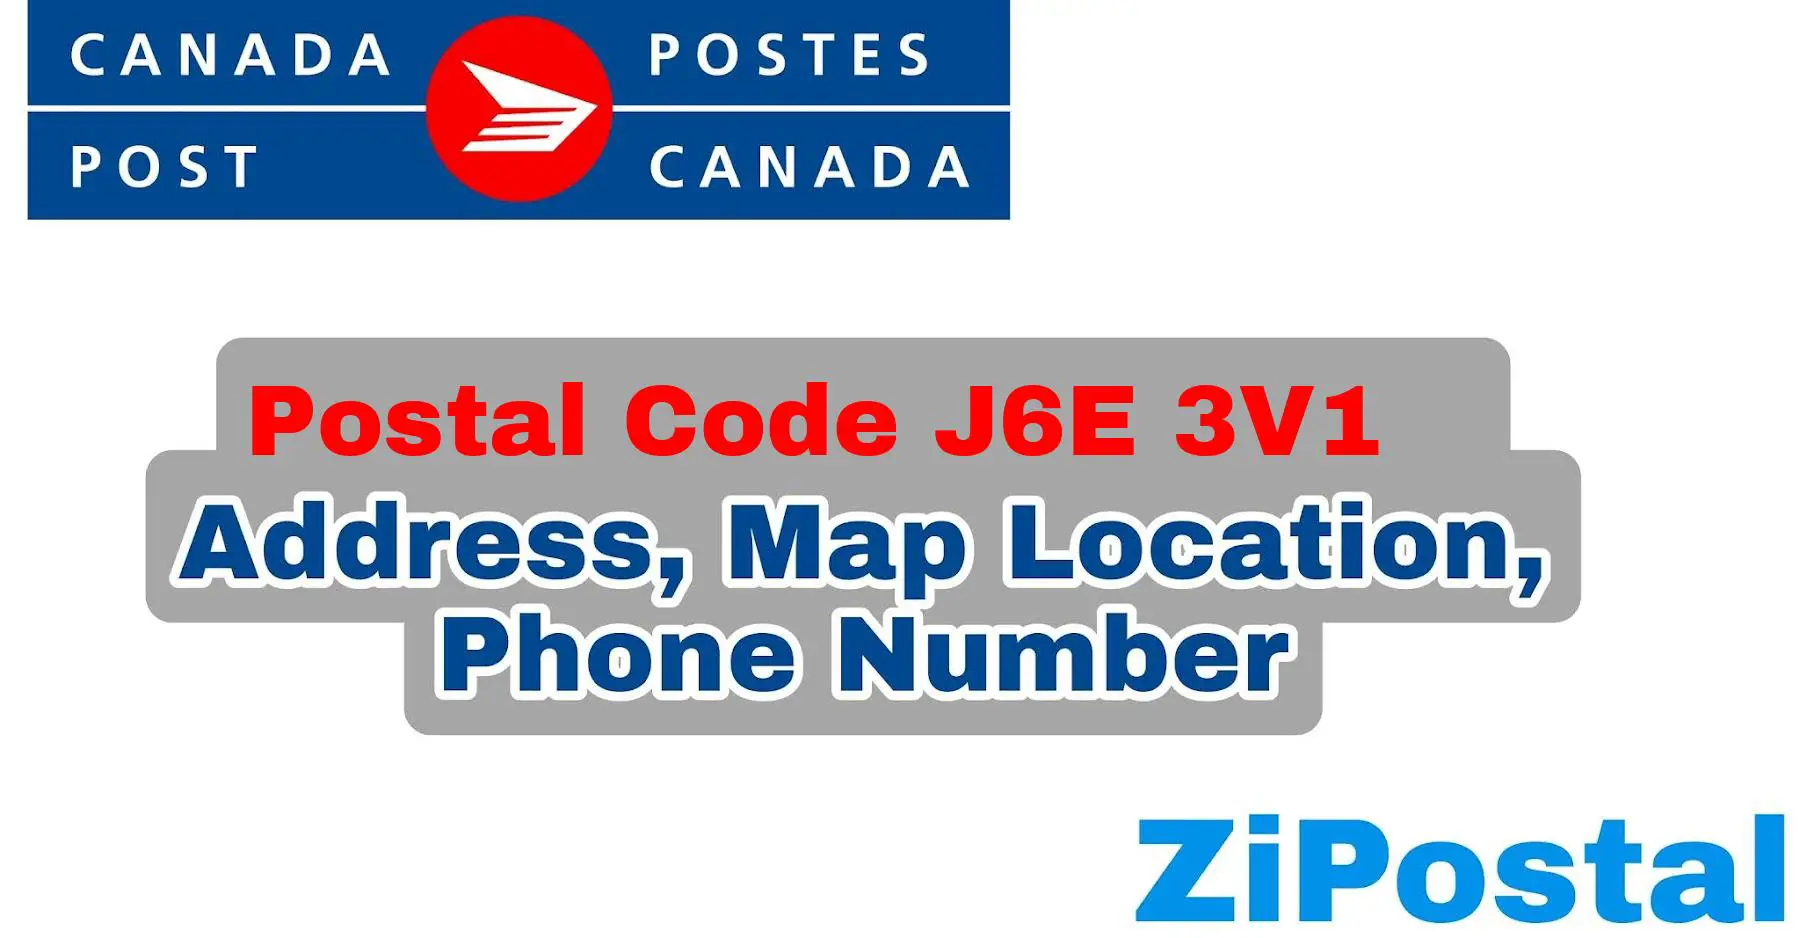 Postal Code J6E 3V1 Address Map Location and Phone Number